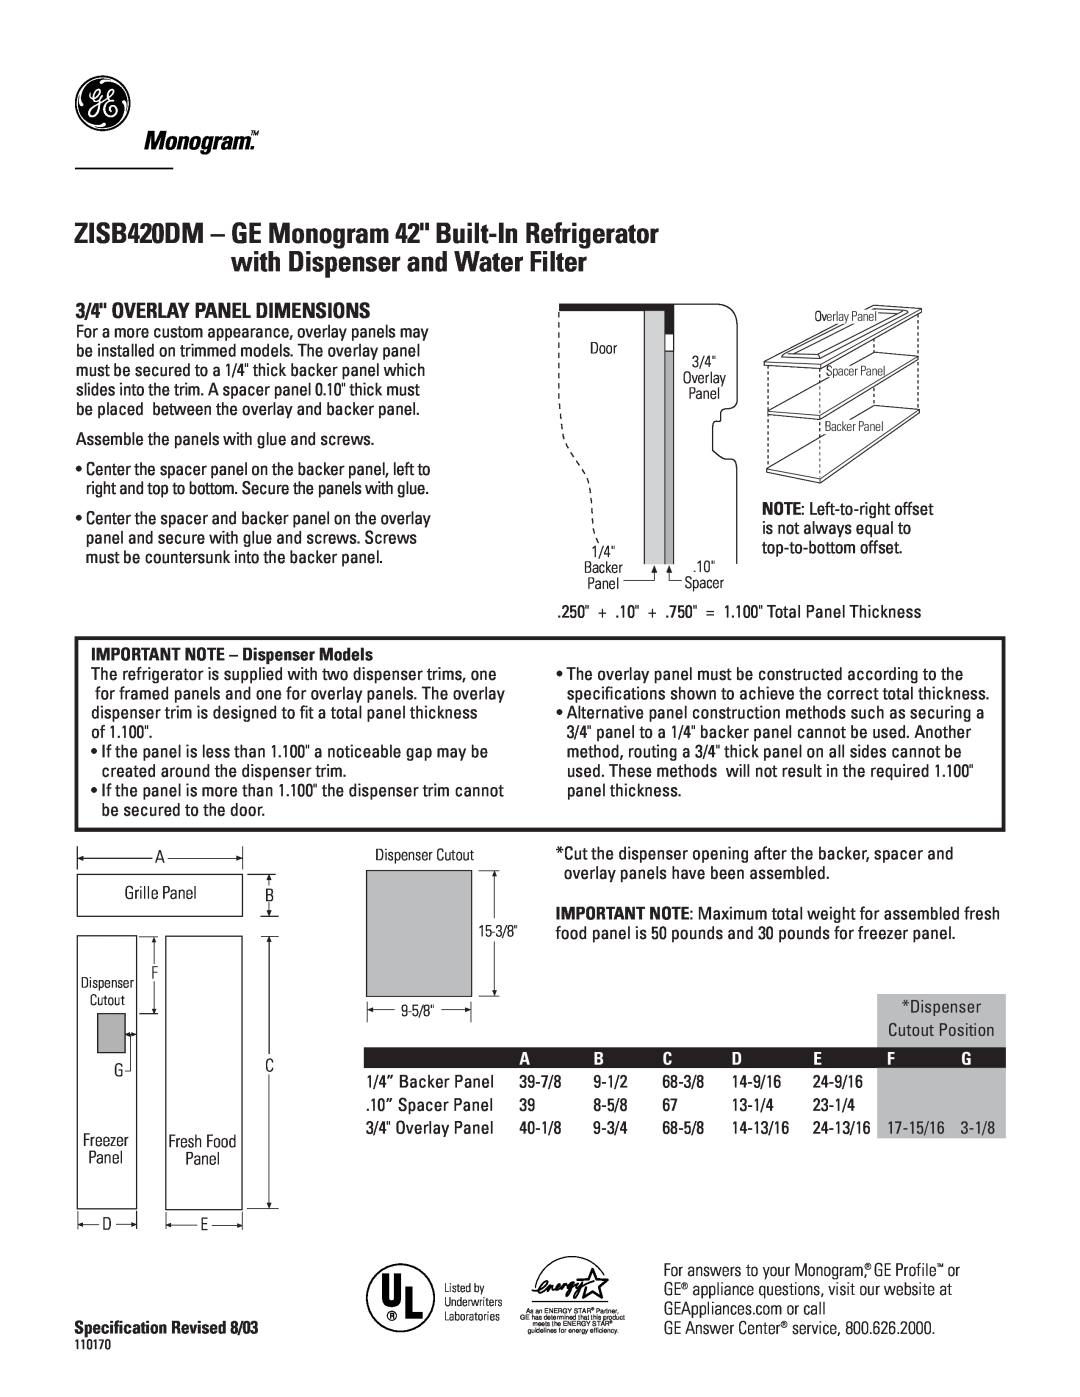 GE Monogram ZISB420DM specifications Monogram, 3/4 OVERLAY PANEL DIMENSIONS, IMPORTANT NOTE - Dispenser Models 